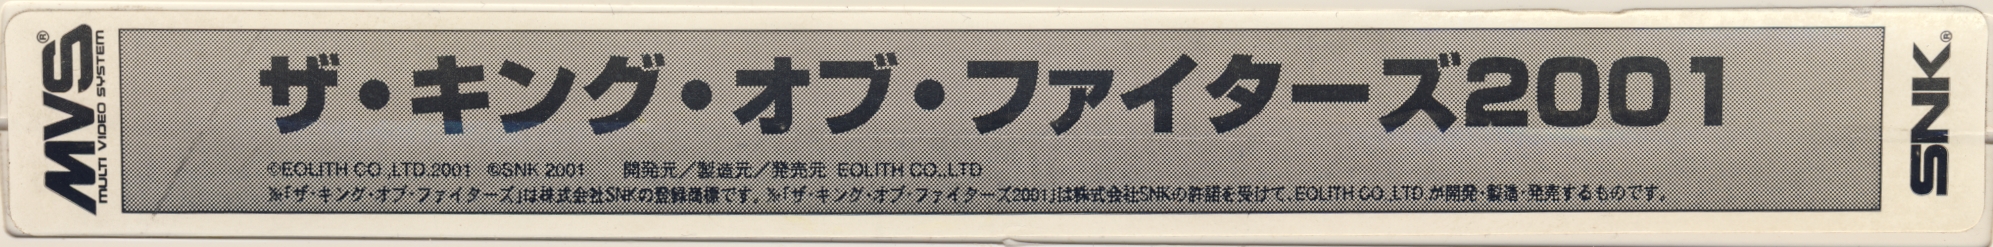 Kof2001 jp label.jpg